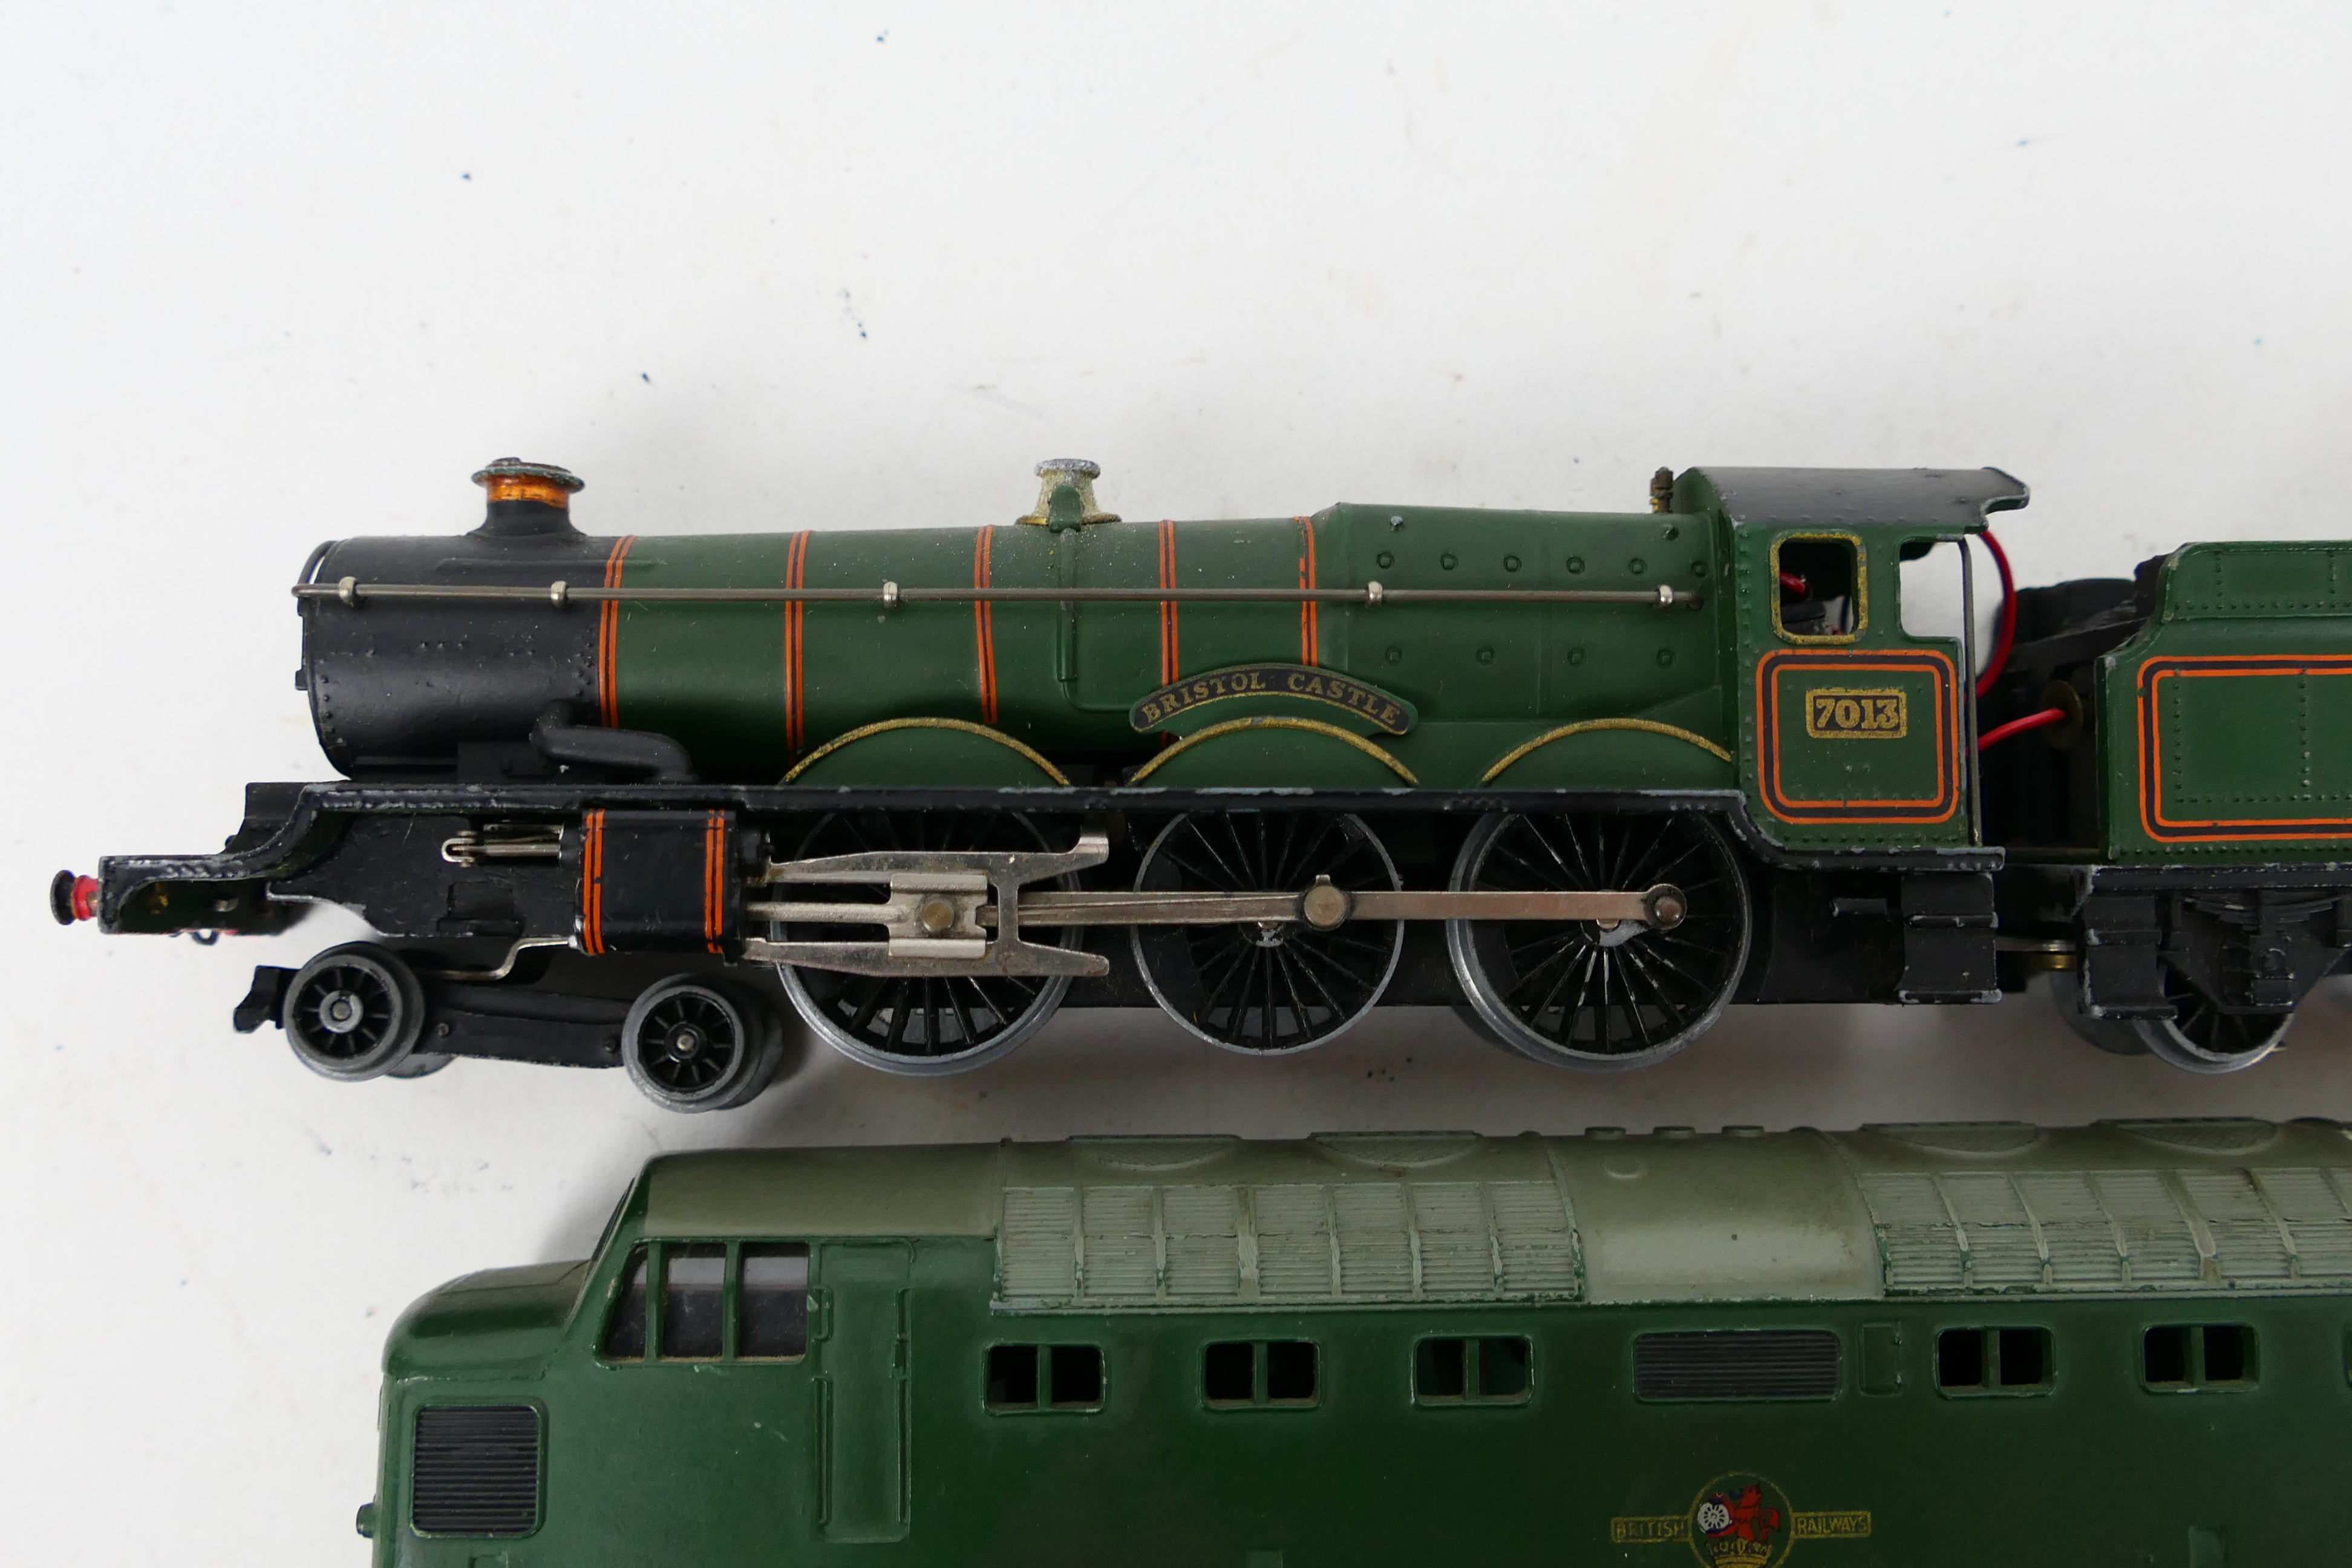 Hornby Dublo - 3 x unboxed 3 rail locomotives, a 4-6-0 named Bristol Castle number 7013, - Image 2 of 4